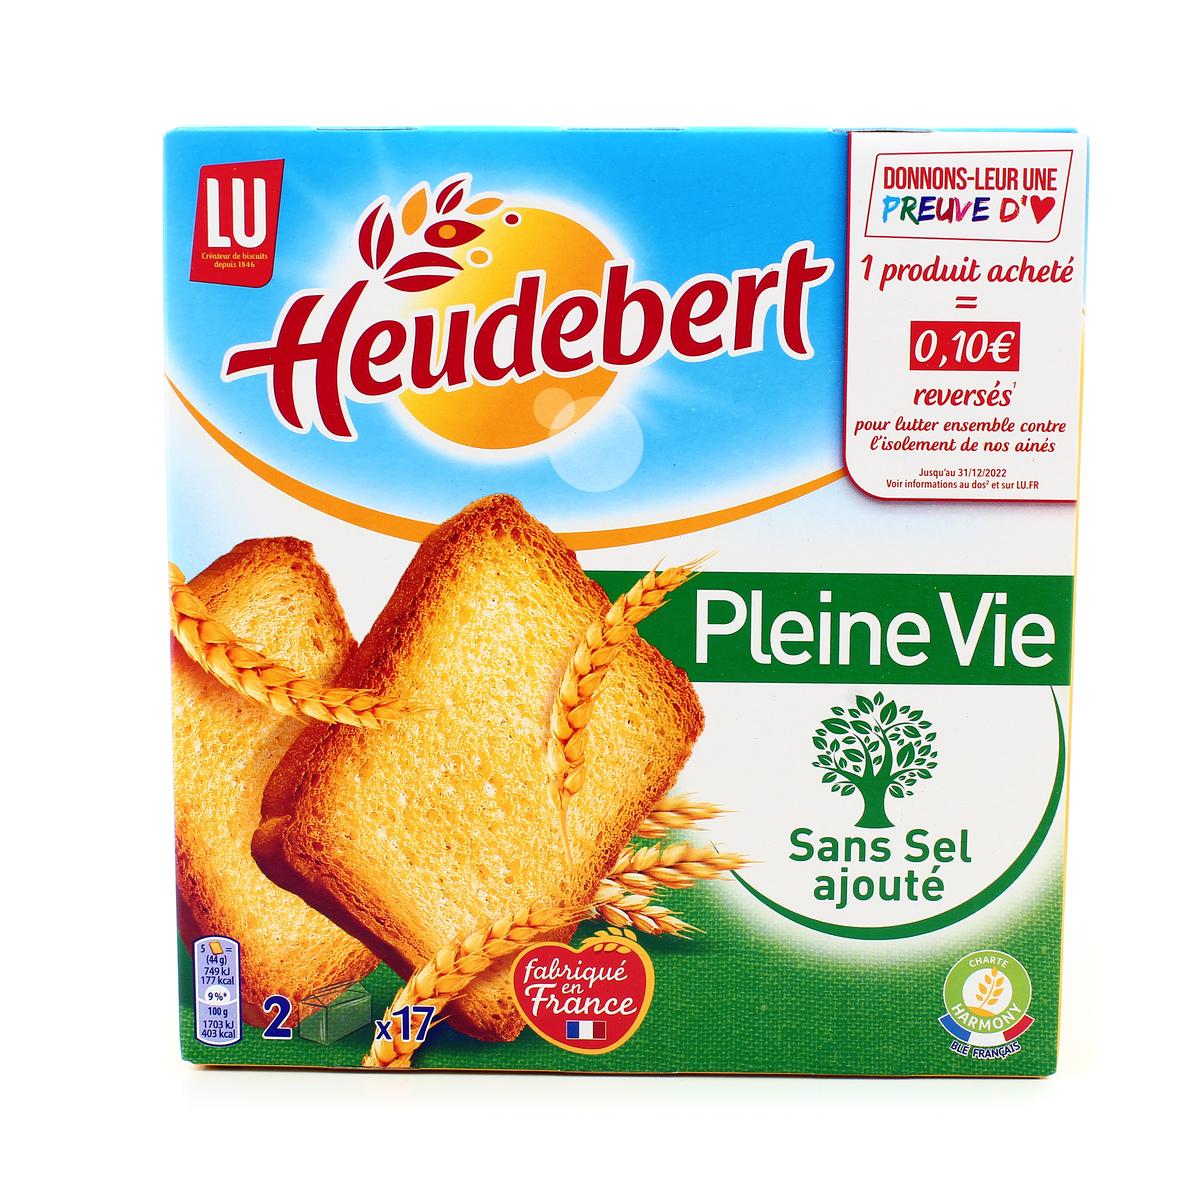 LU - Heudebert Biscottes, 290g Box